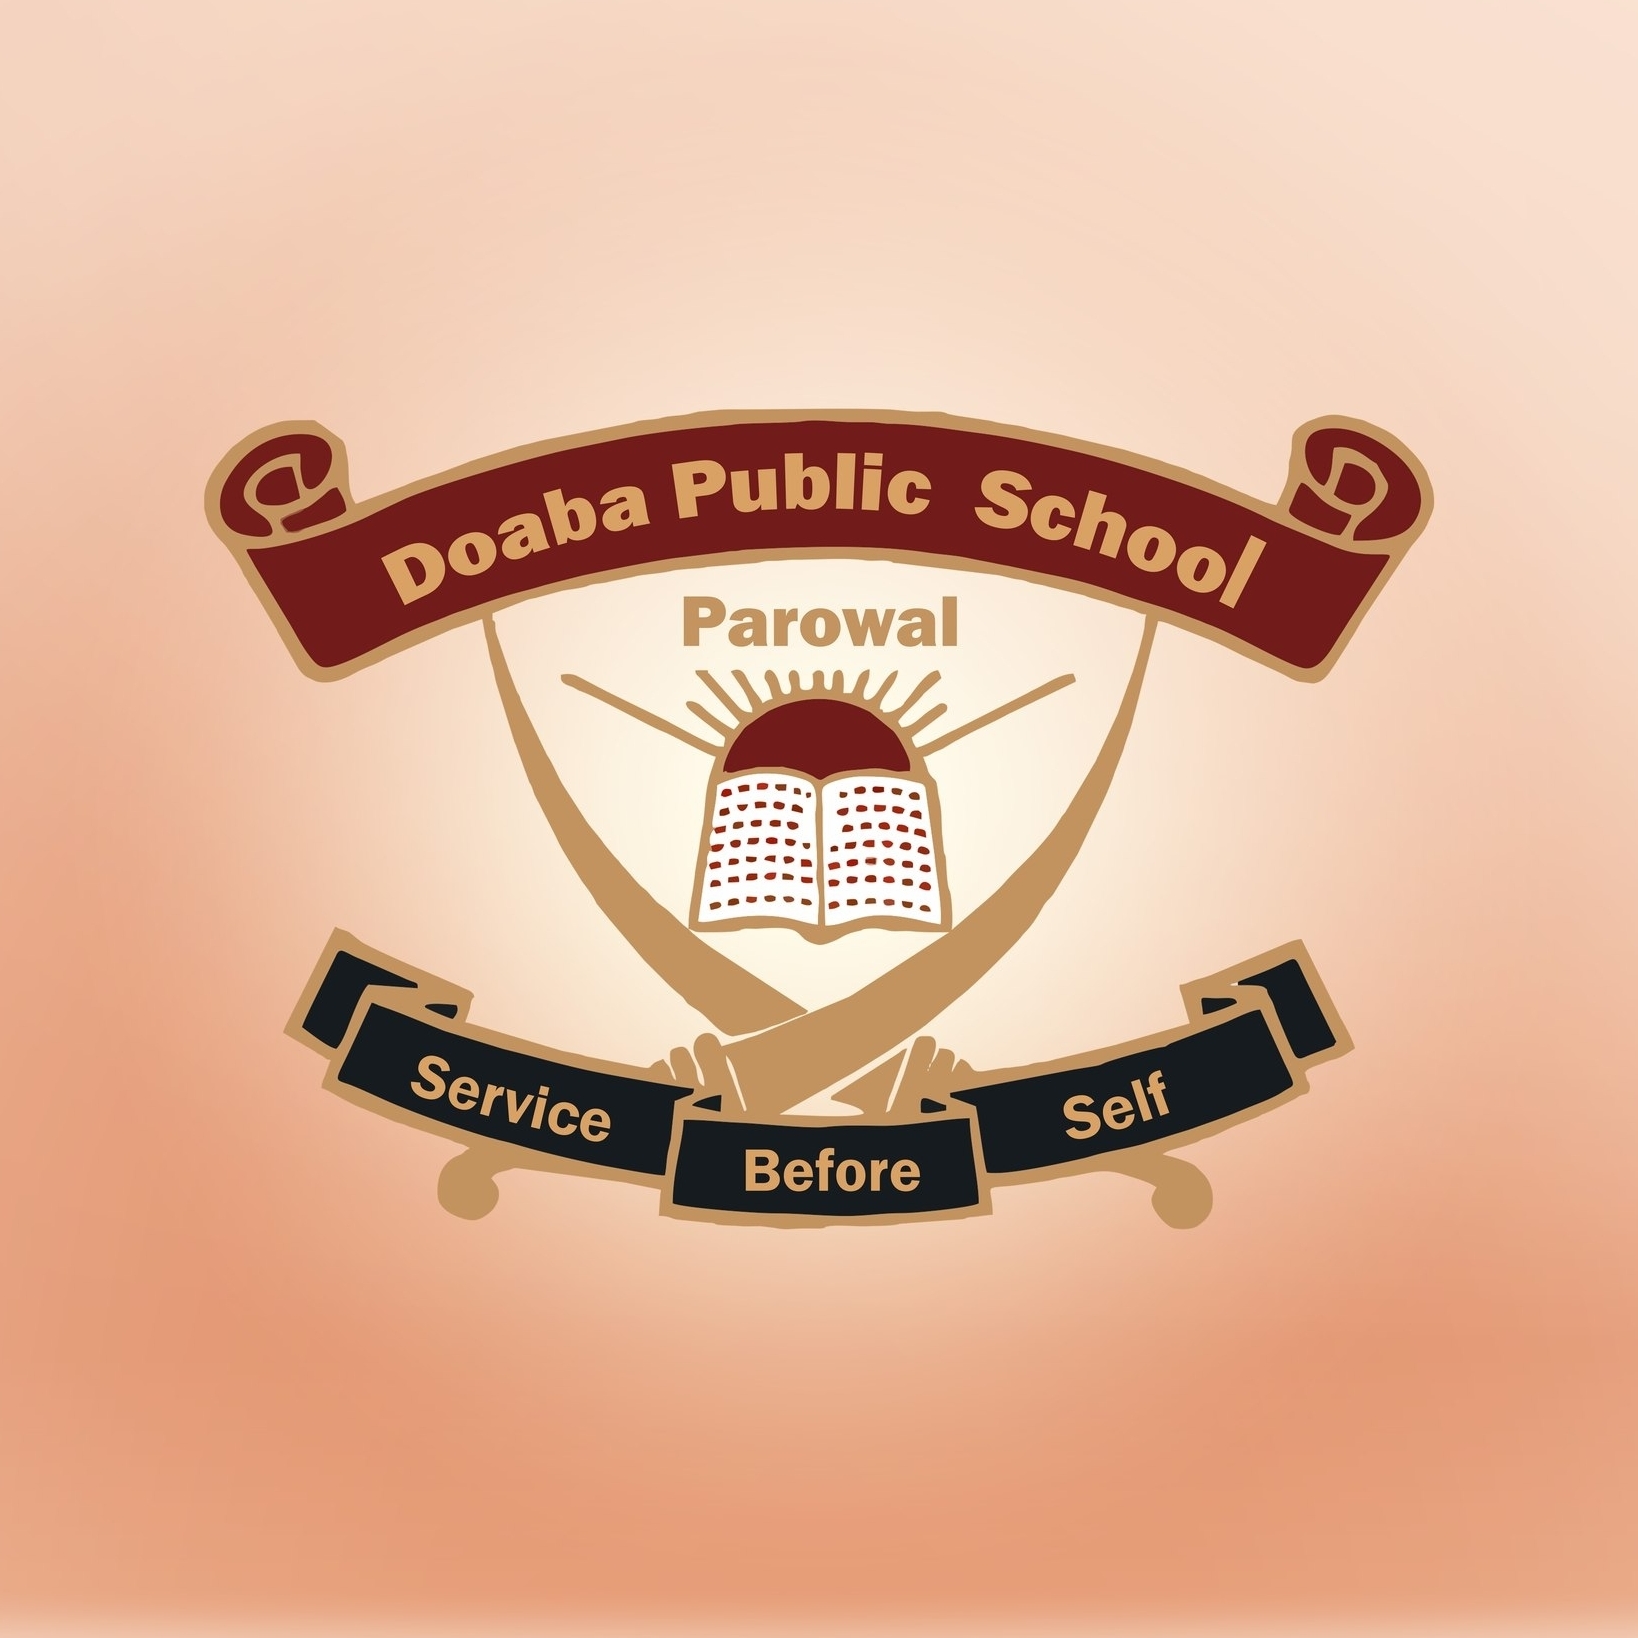 Doaba Public School  Parowal